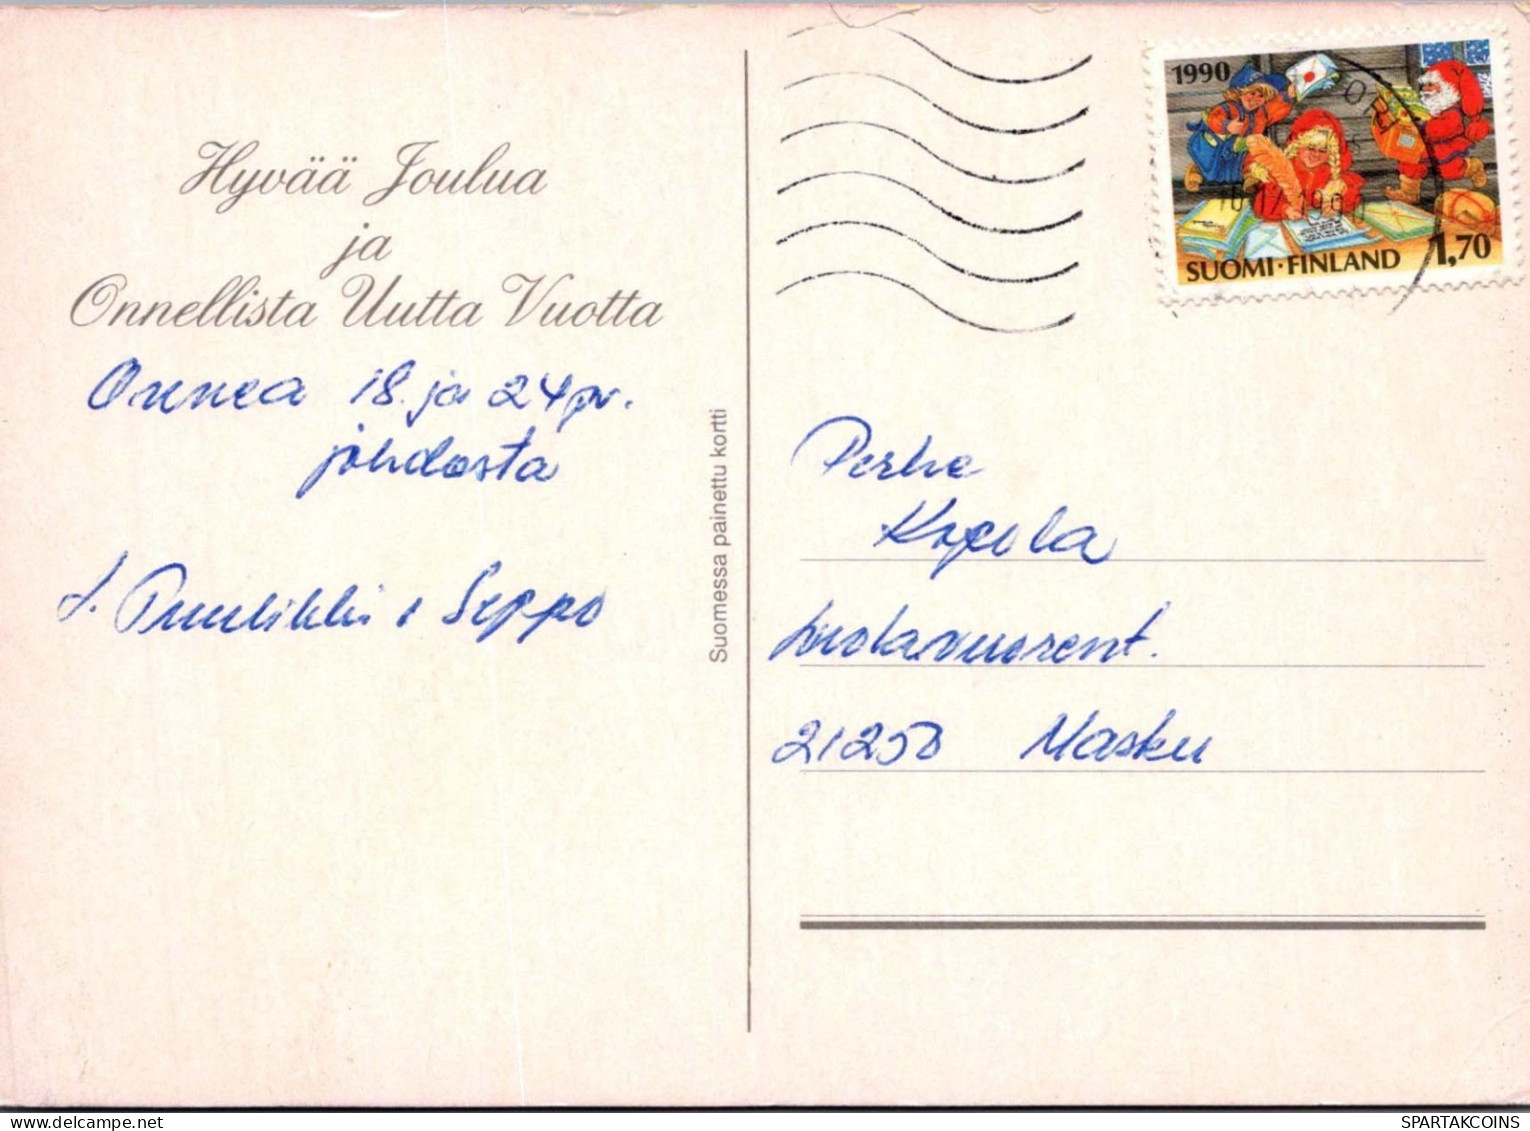 BABBO NATALE Buon Anno Natale Vintage Cartolina CPSM #PBL178.IT - Santa Claus